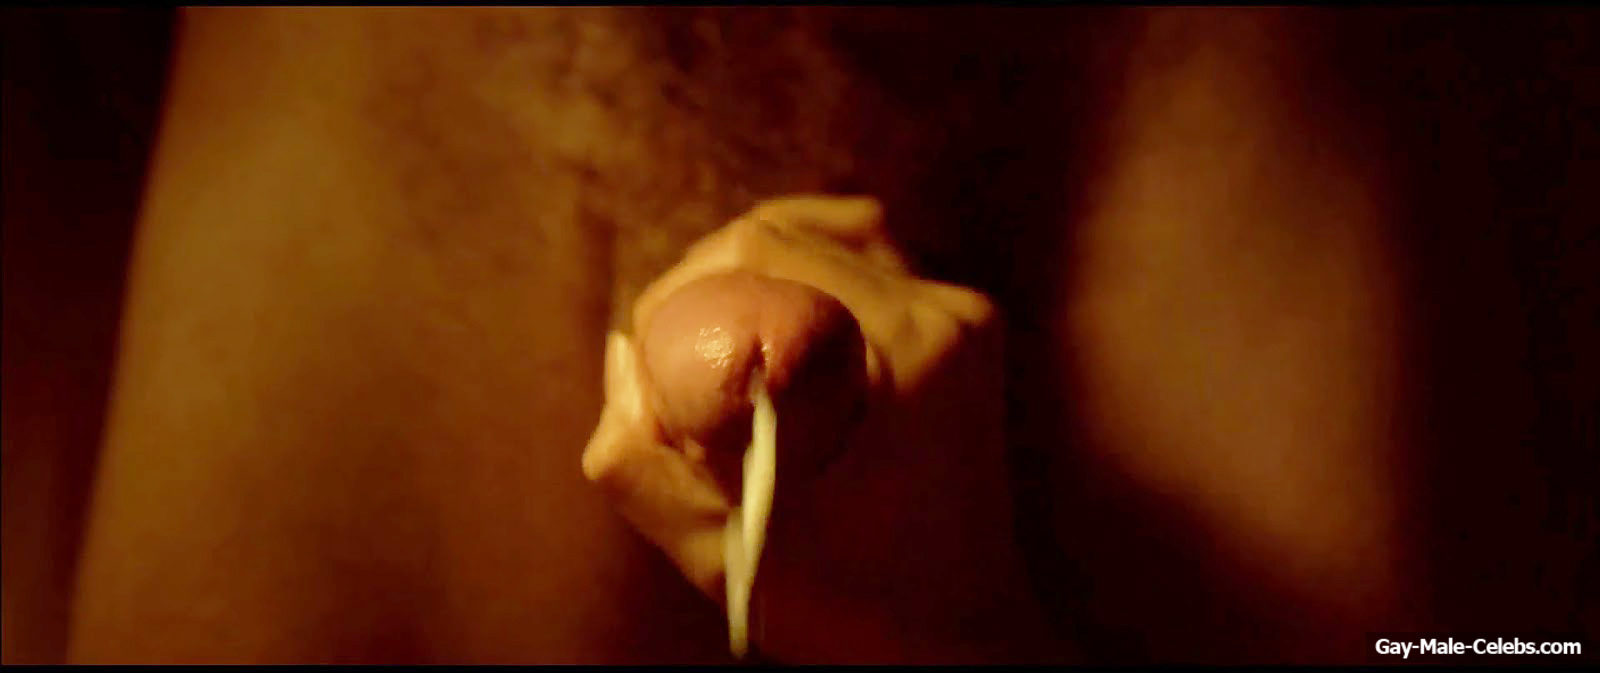 Hot Karl Glusman Nude & Cumshots Scenes from Love Boy Nudes